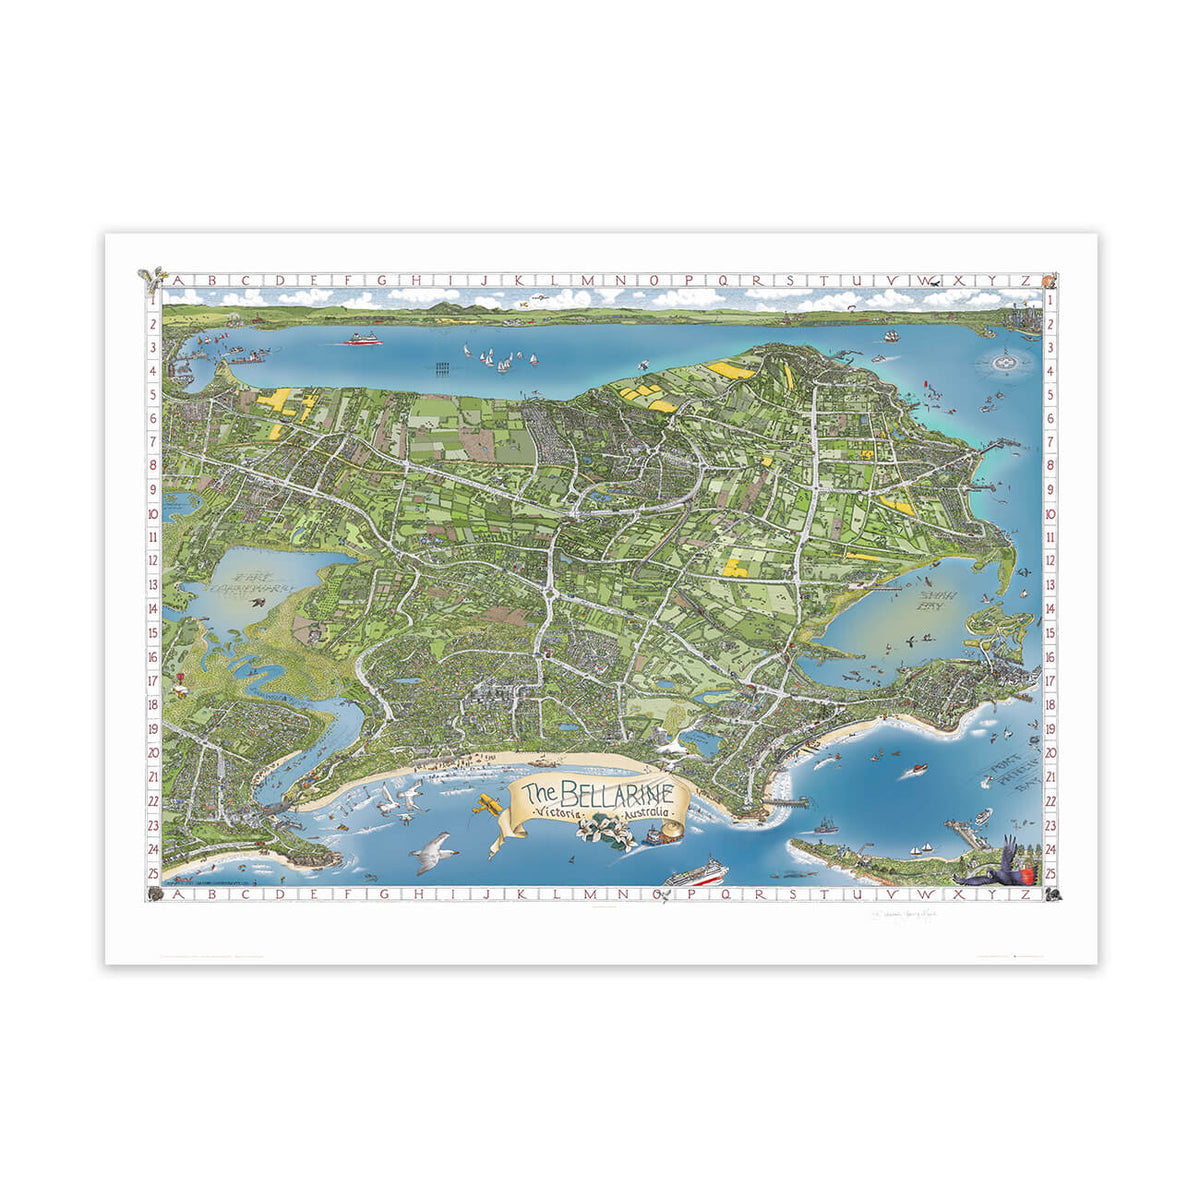 The Bellarine Map - Open Edition prints